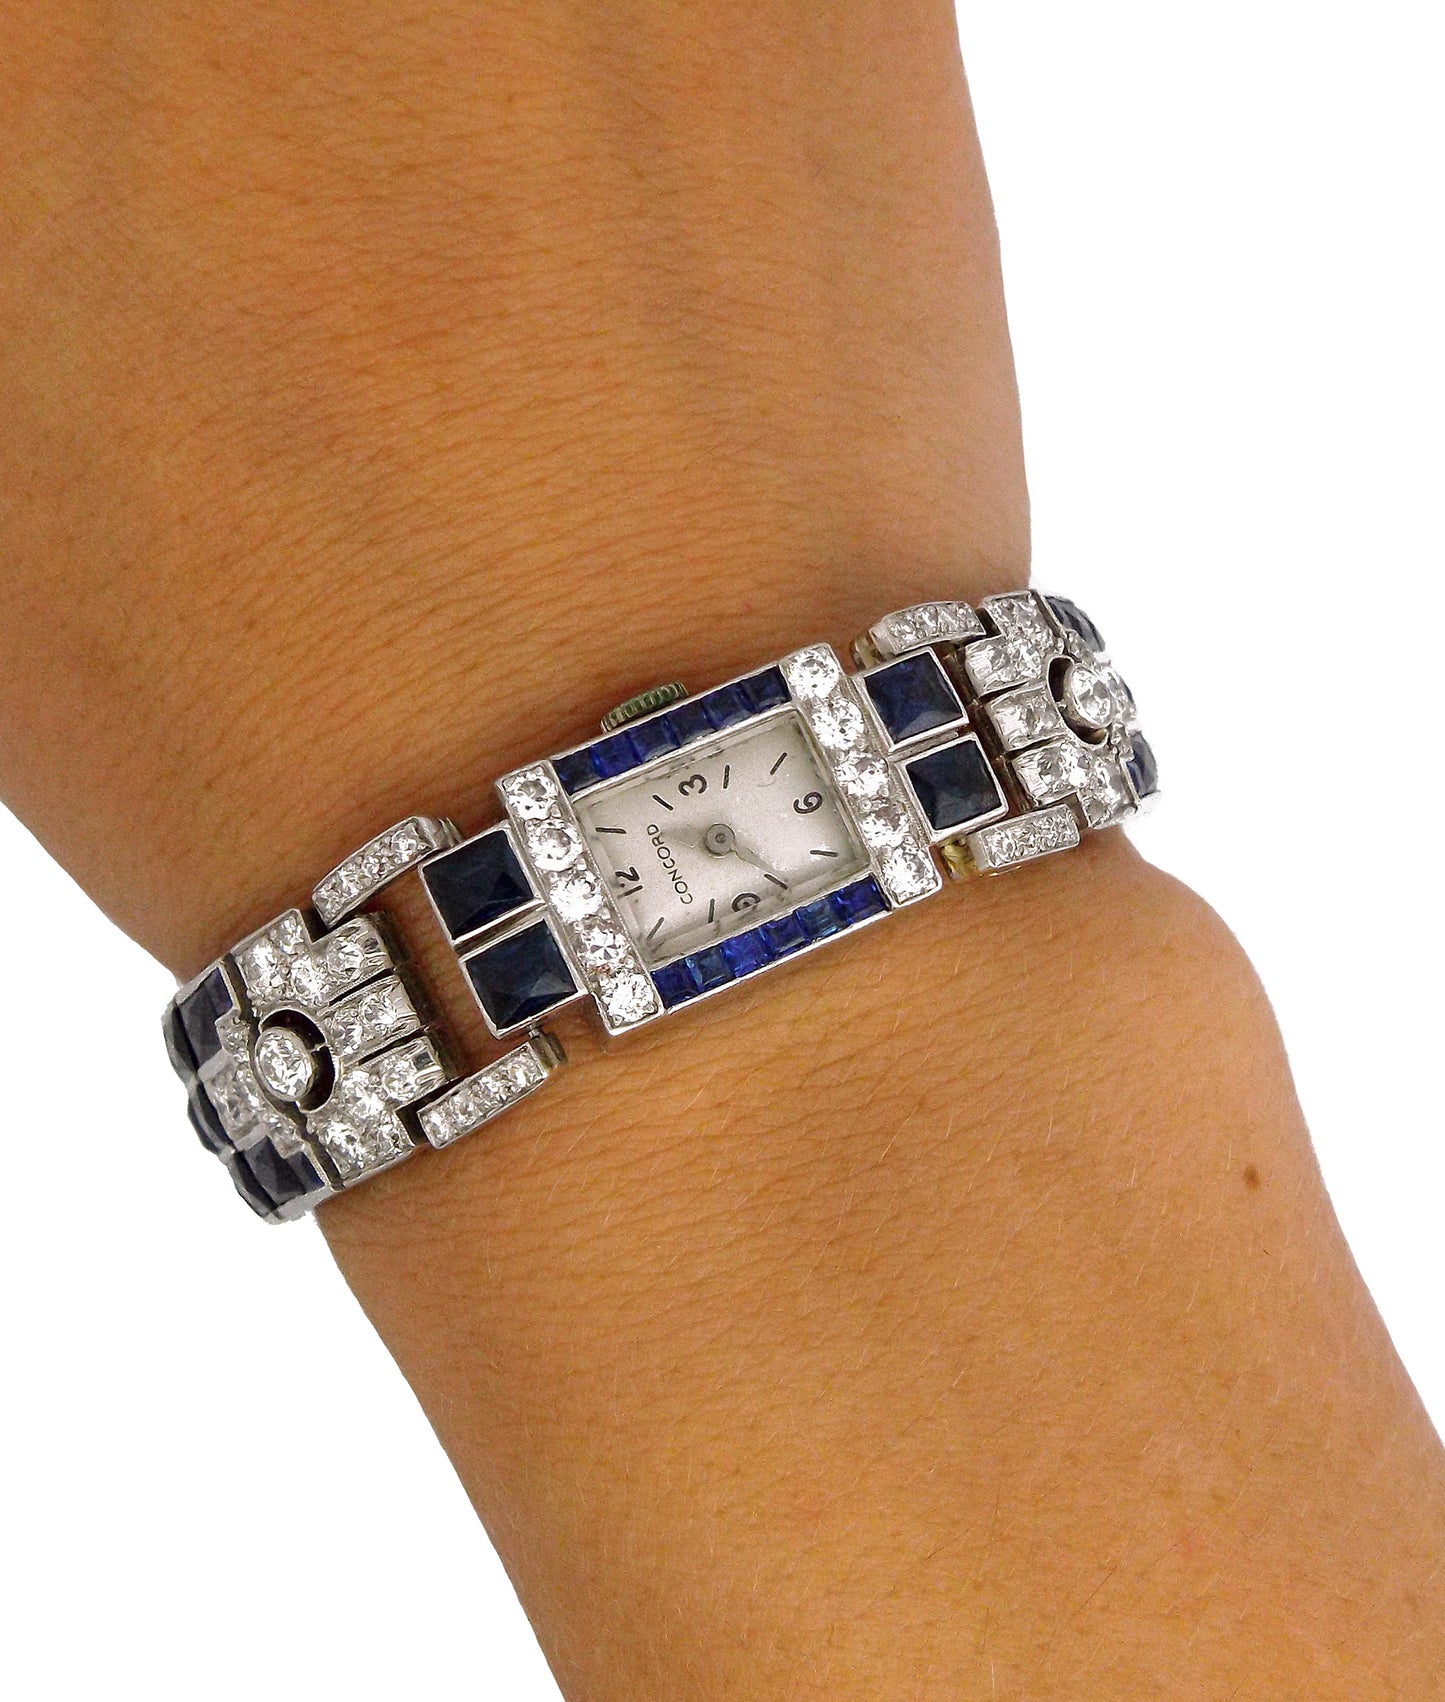 Concord Sapphire 5ct Diamond Bracelet Wristwatch Watch 7"